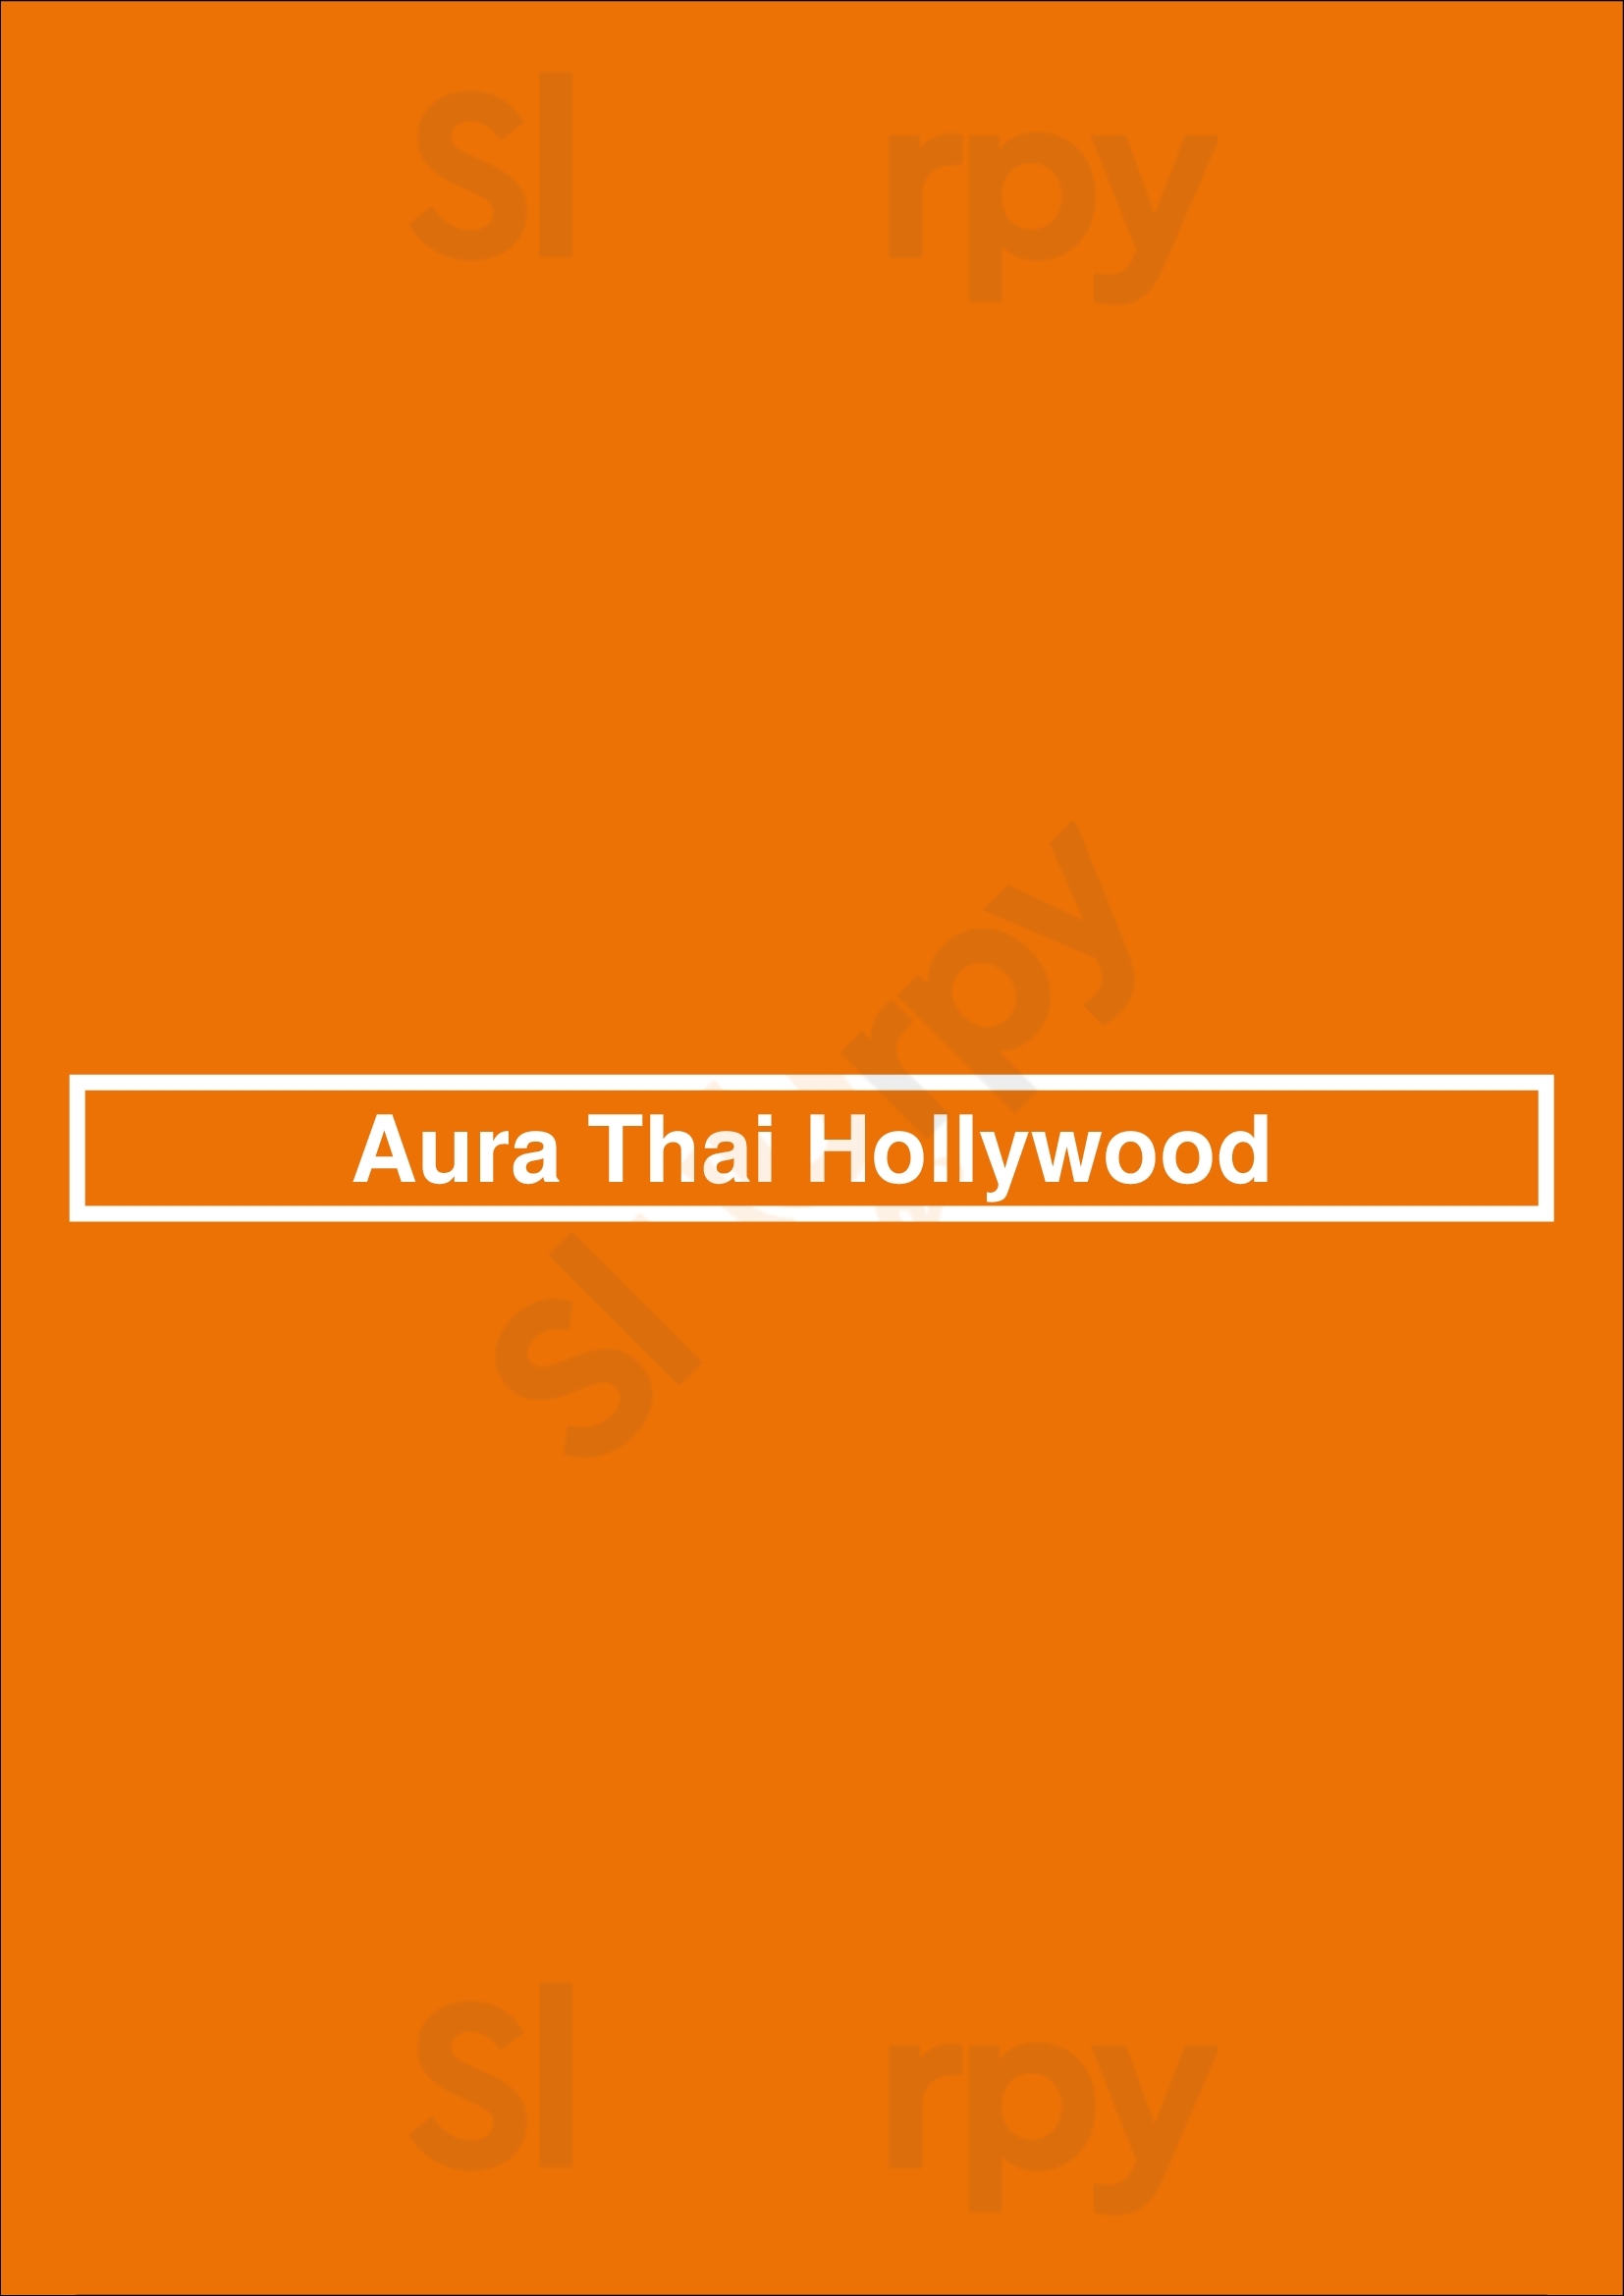 Aura Thai Hollywood Los Angeles Menu - 1